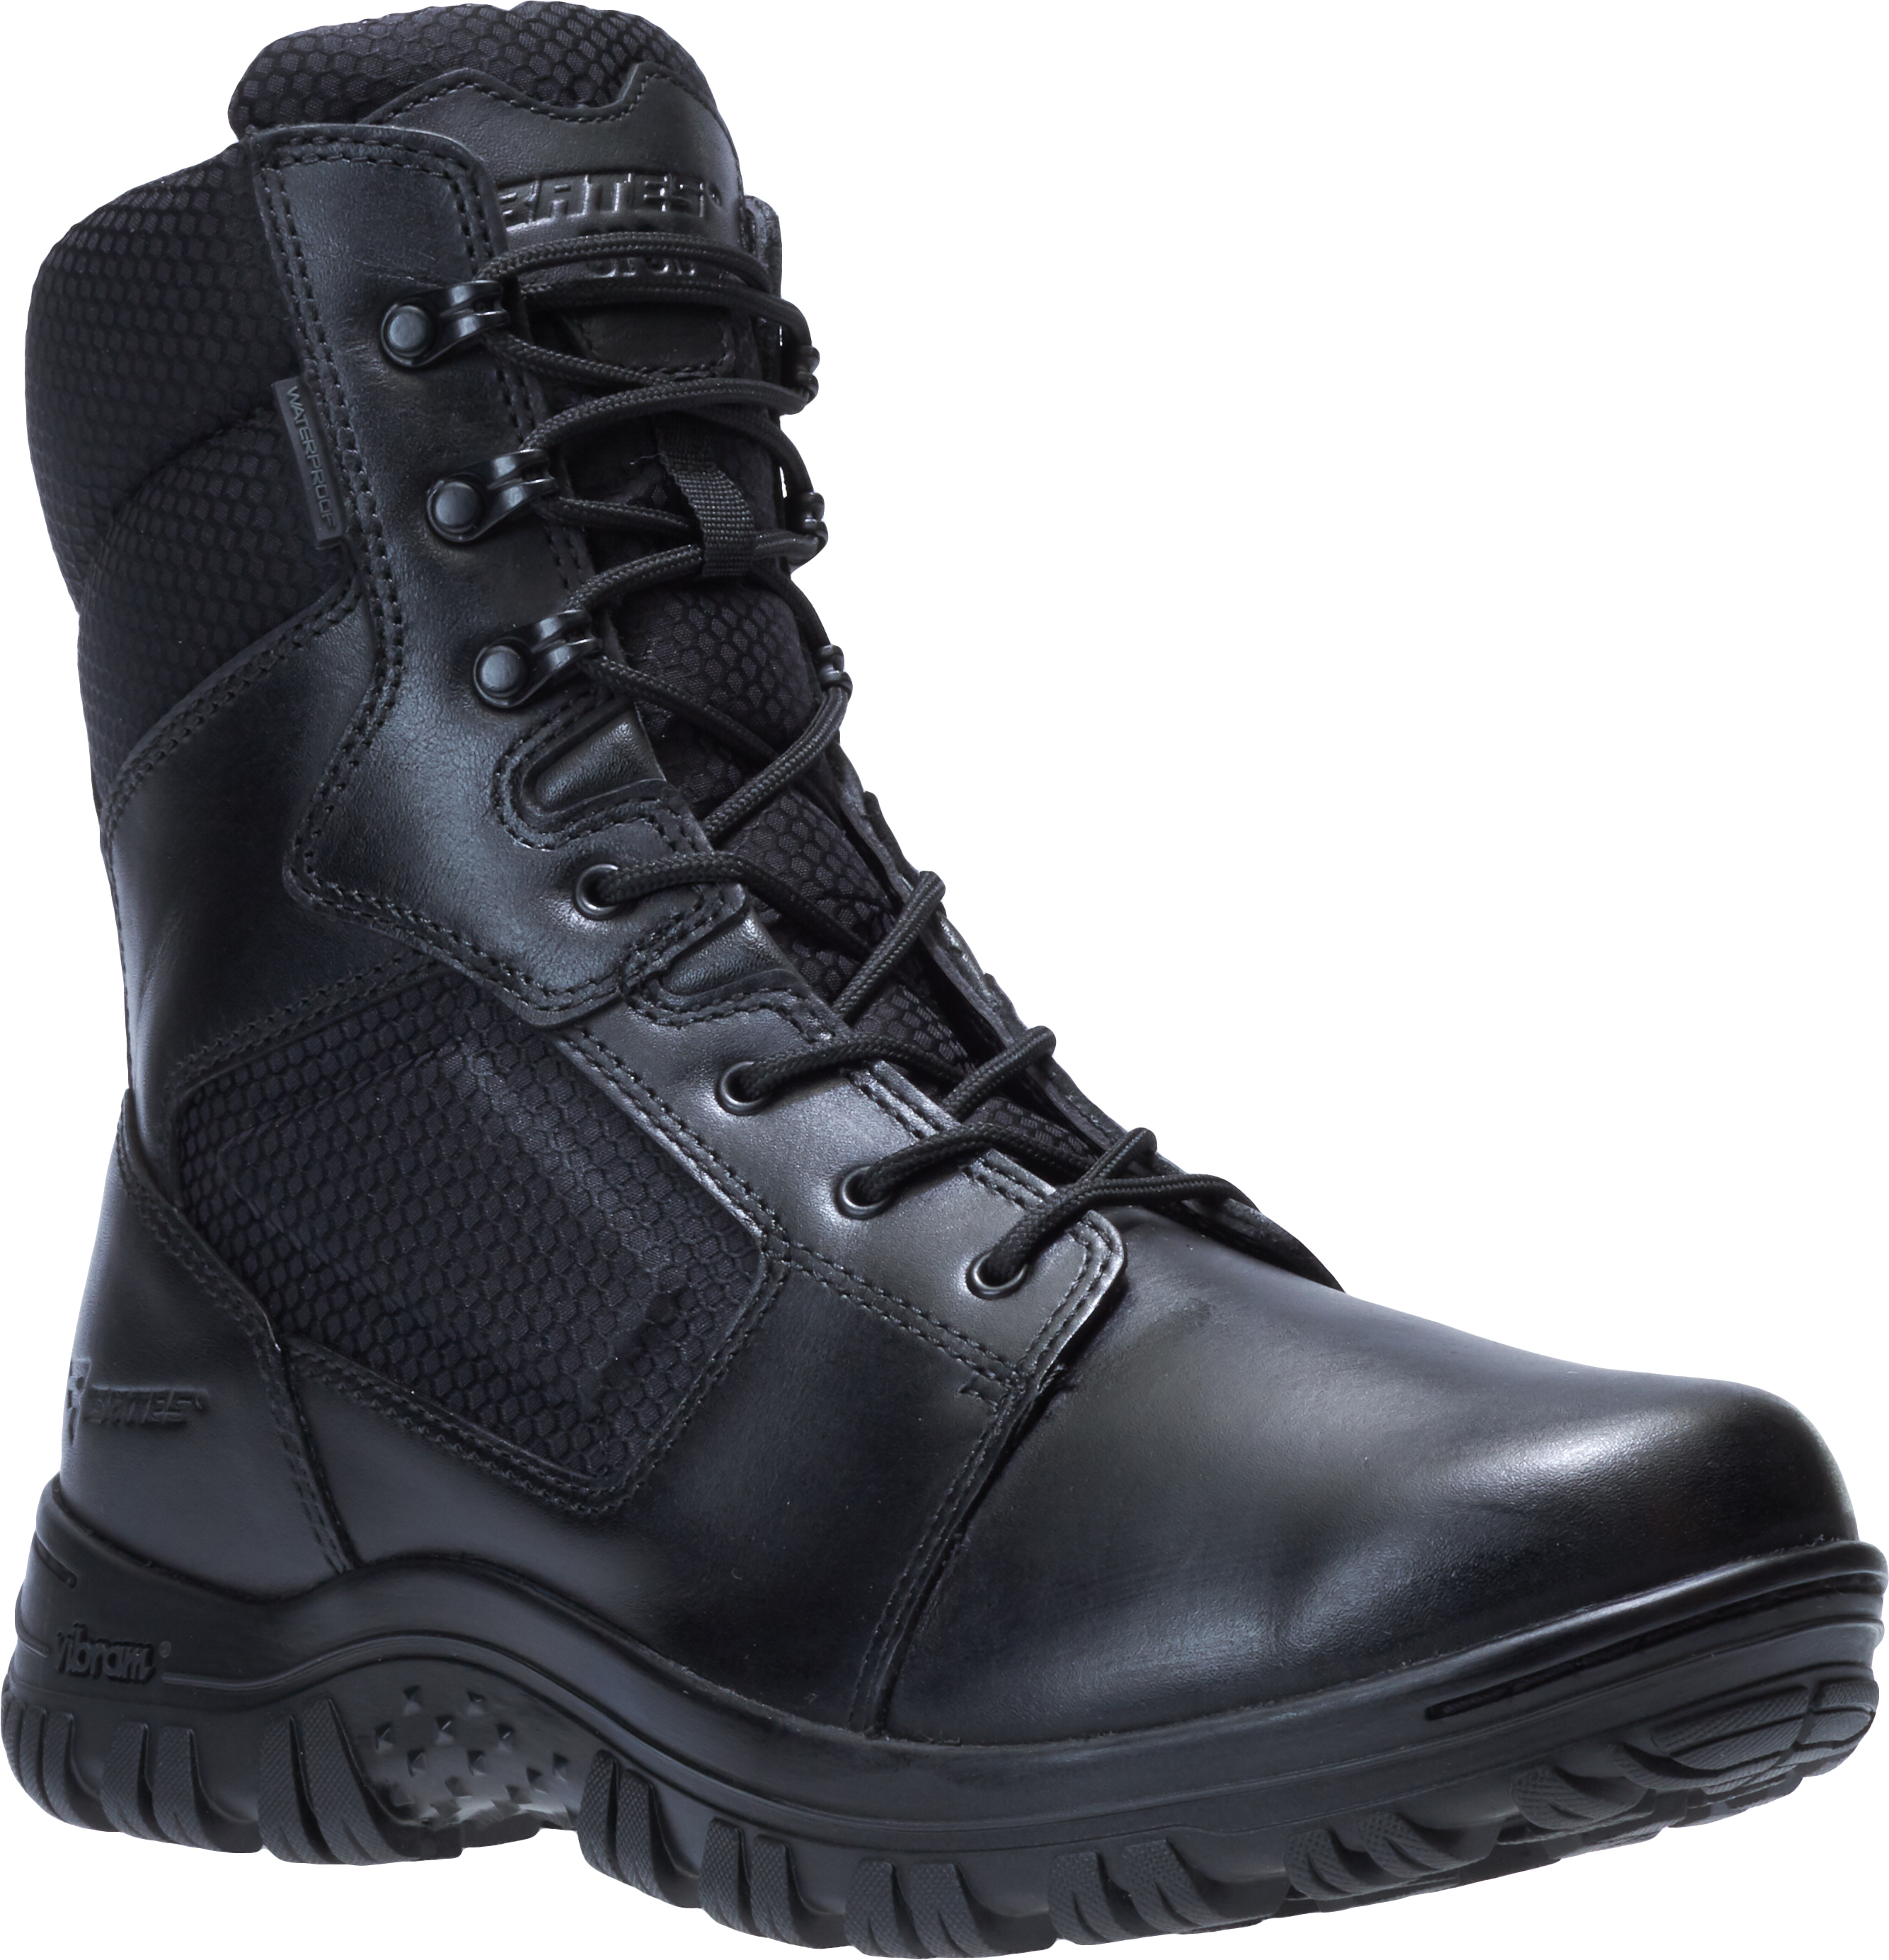 Bates Men's Manuever Black 8" Waterproof Boot - Wide Width Available